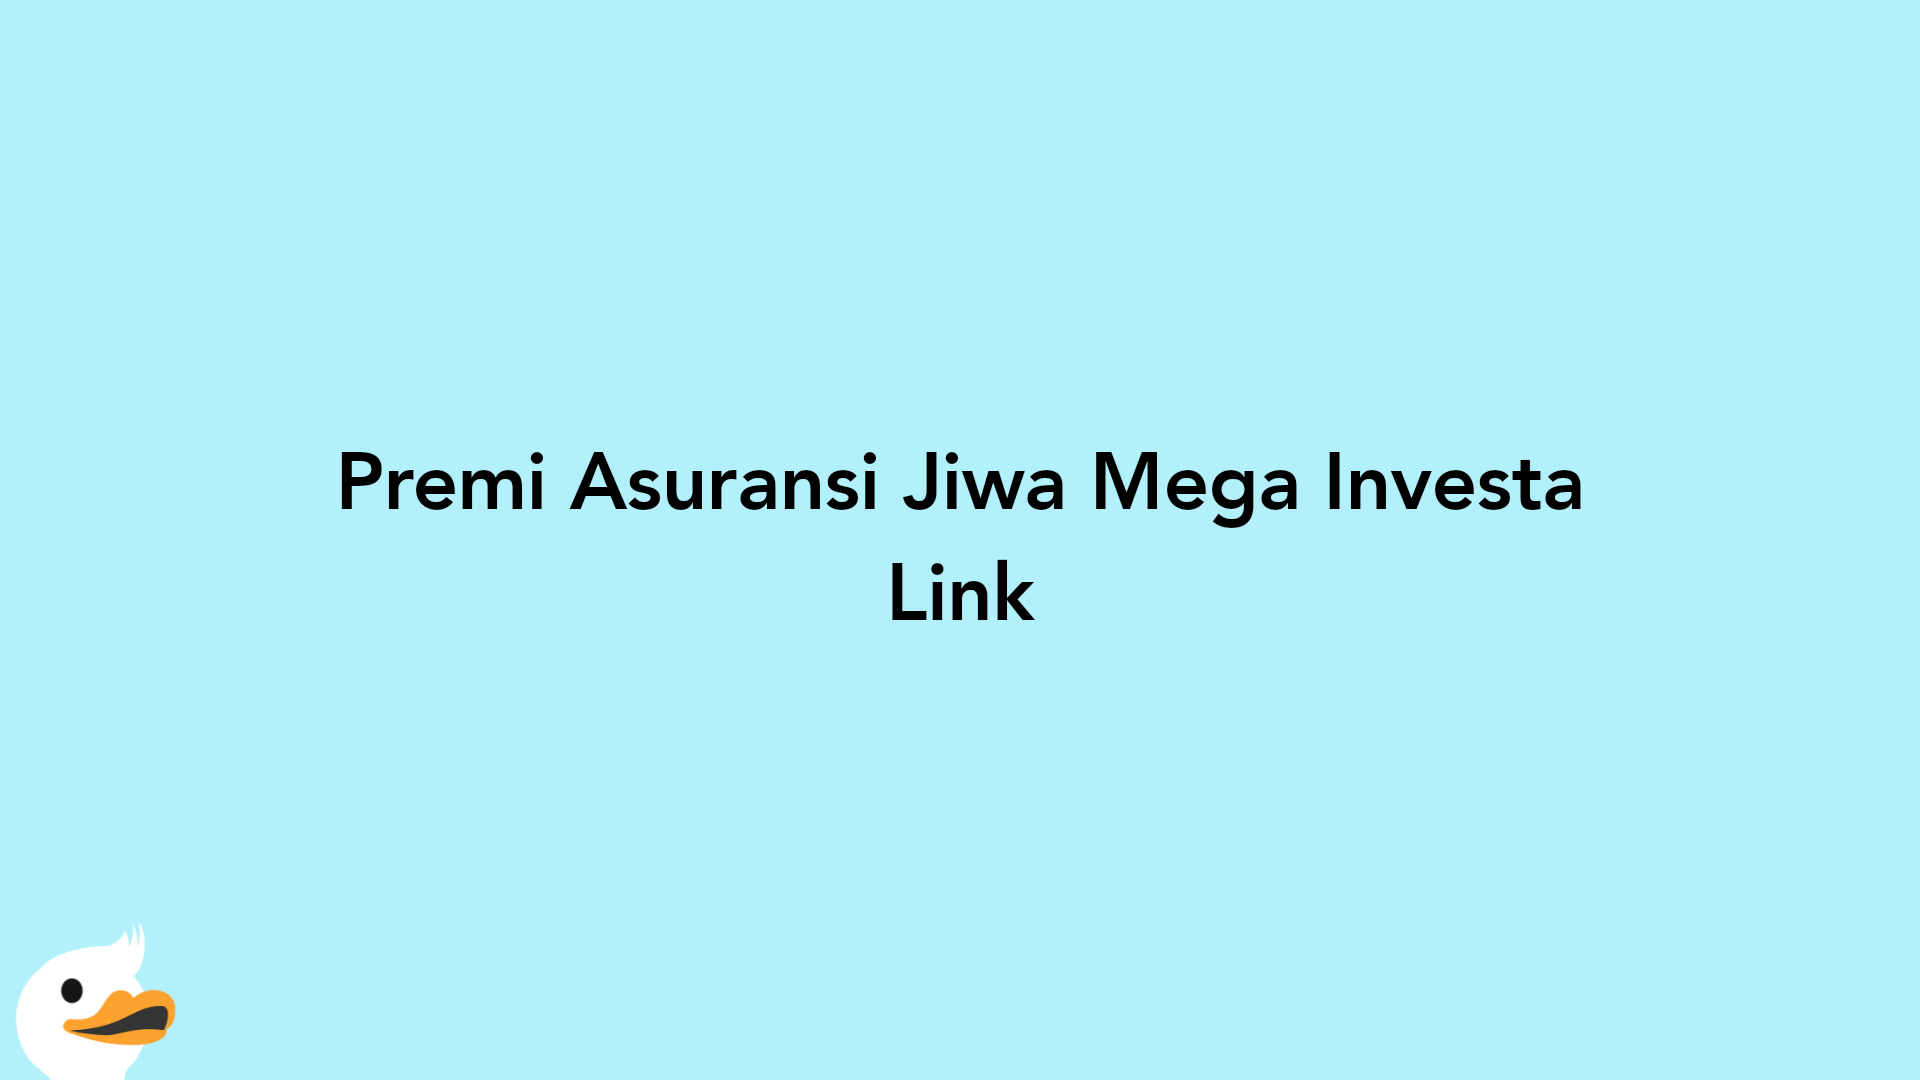 Premi Asuransi Jiwa Mega Investa Link